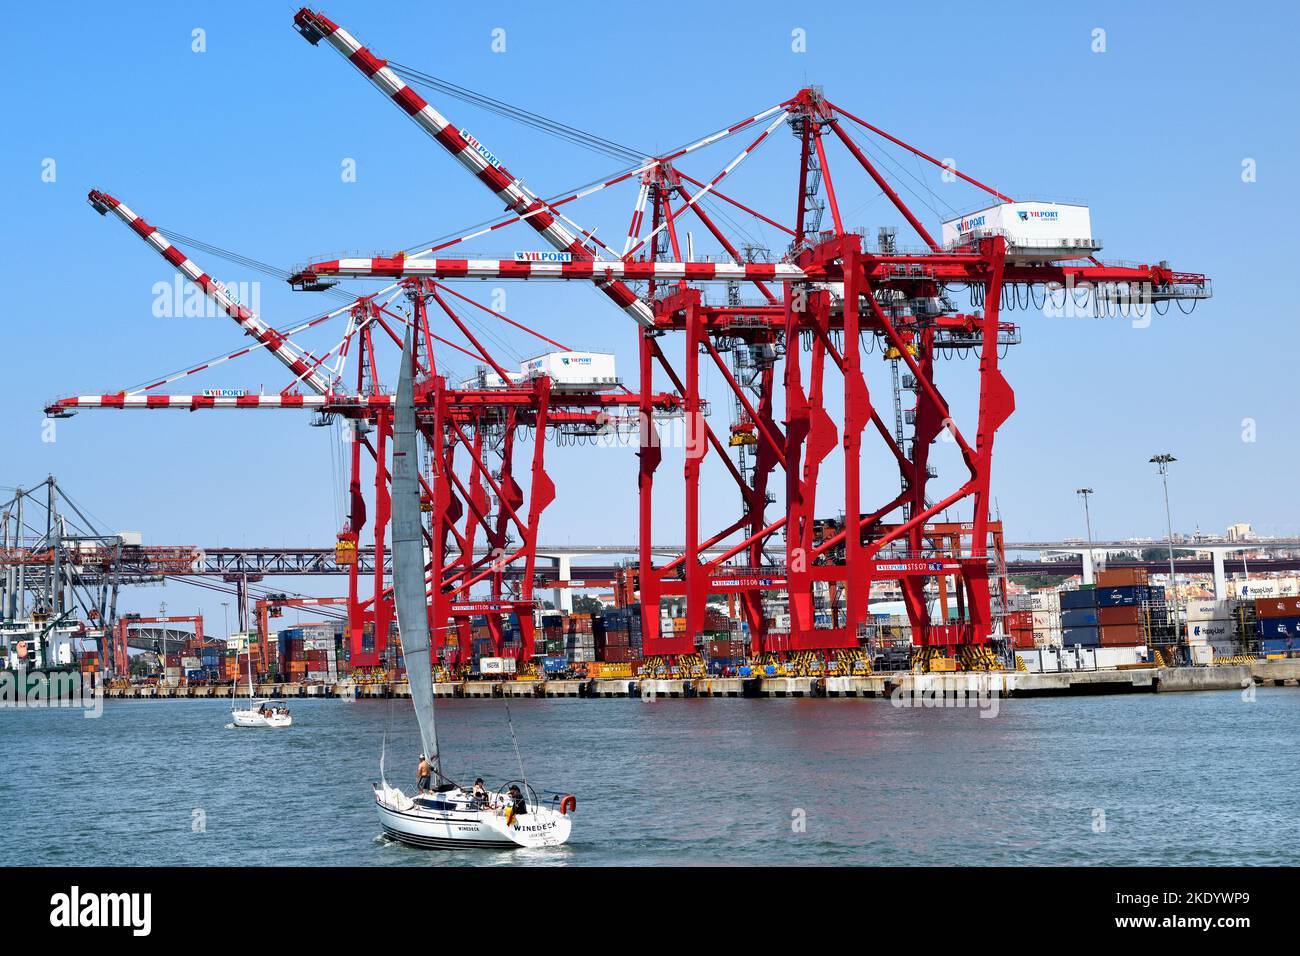 Port de Lisbonne, docks d'Alcantara et pont du 25 avril, Lisbonne, Portugal Banque D'Images